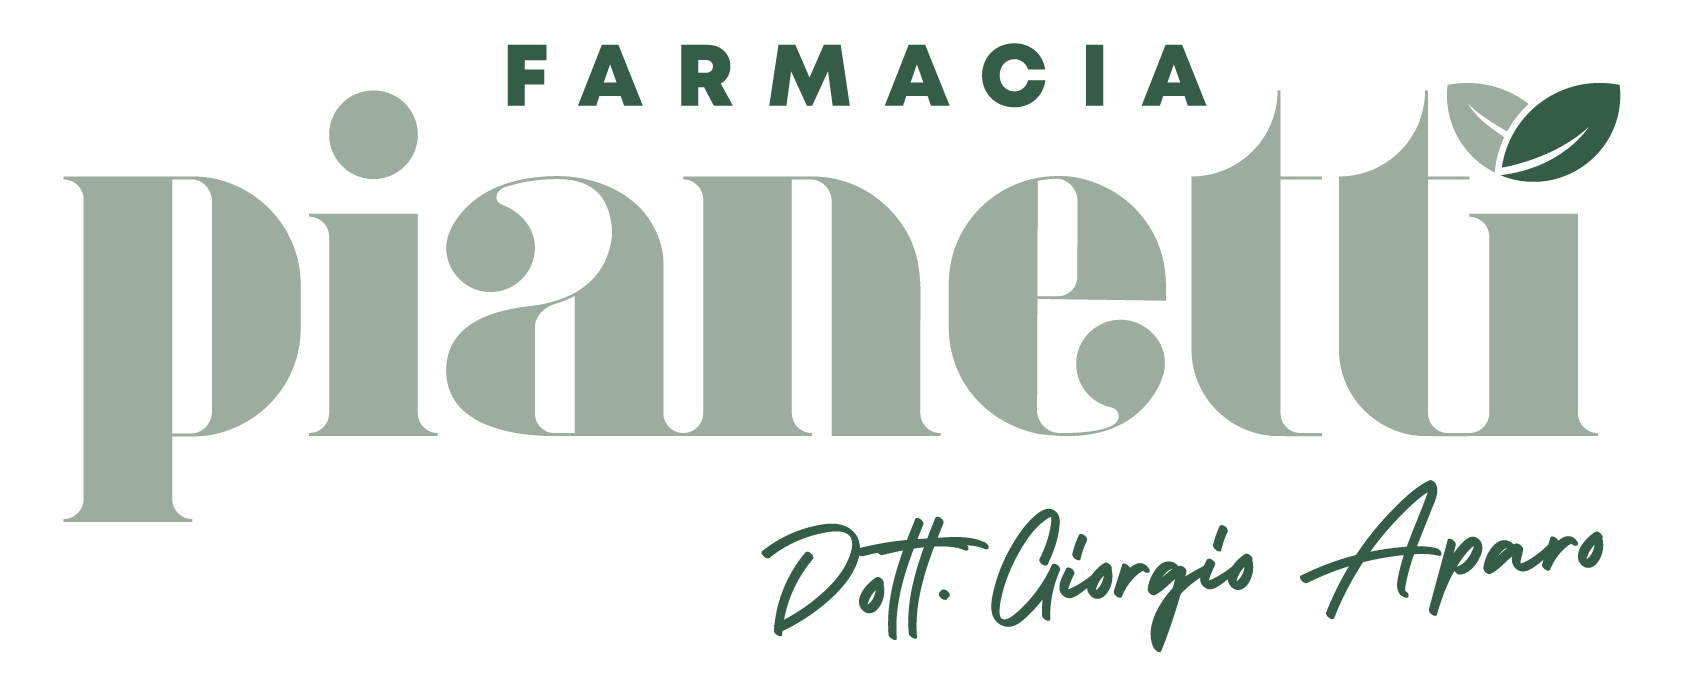 Logo Farmacia Pianetti